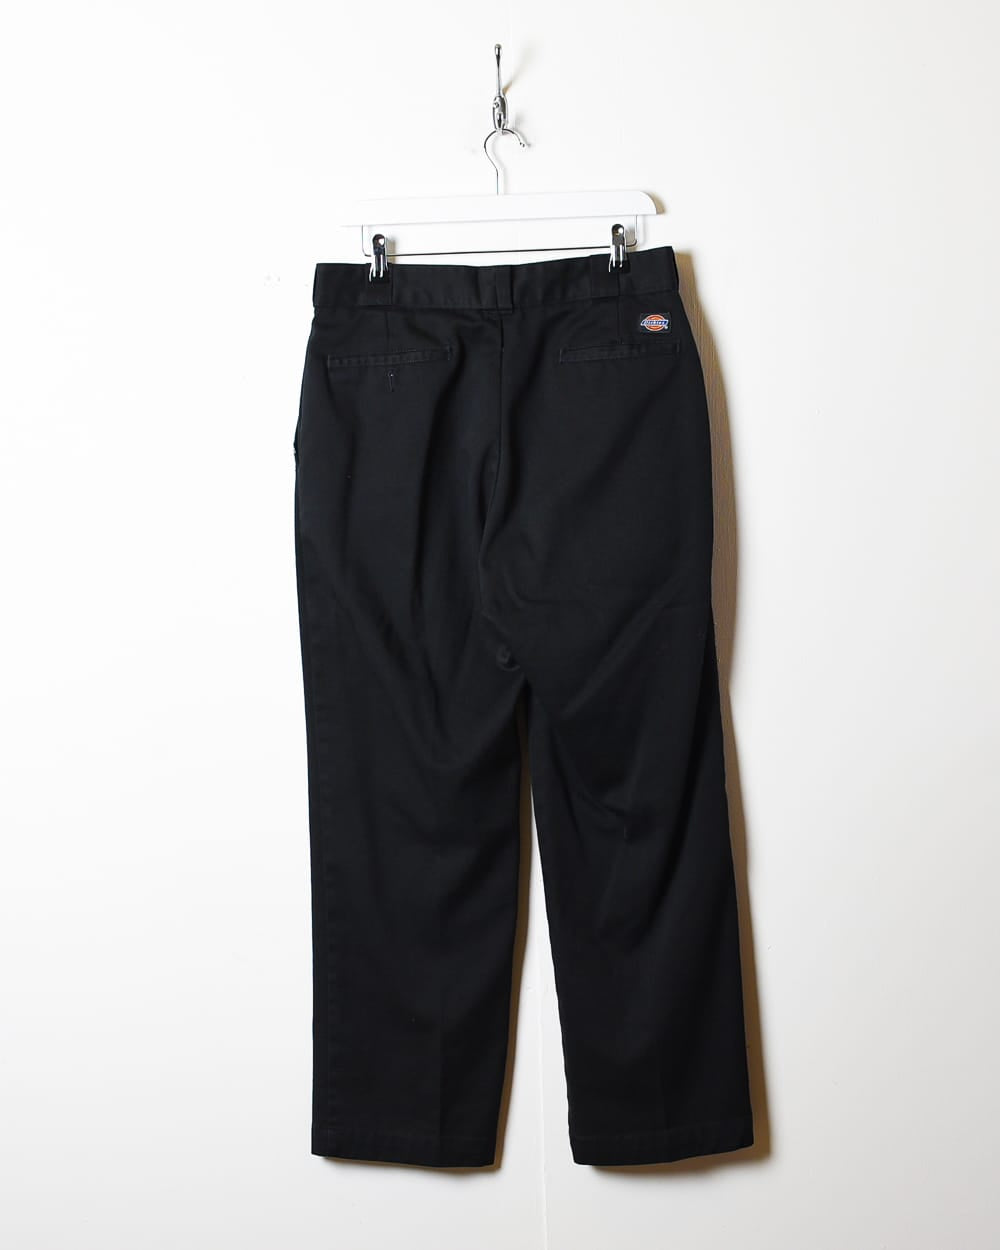 Black Dickies Trousers - W32 L29